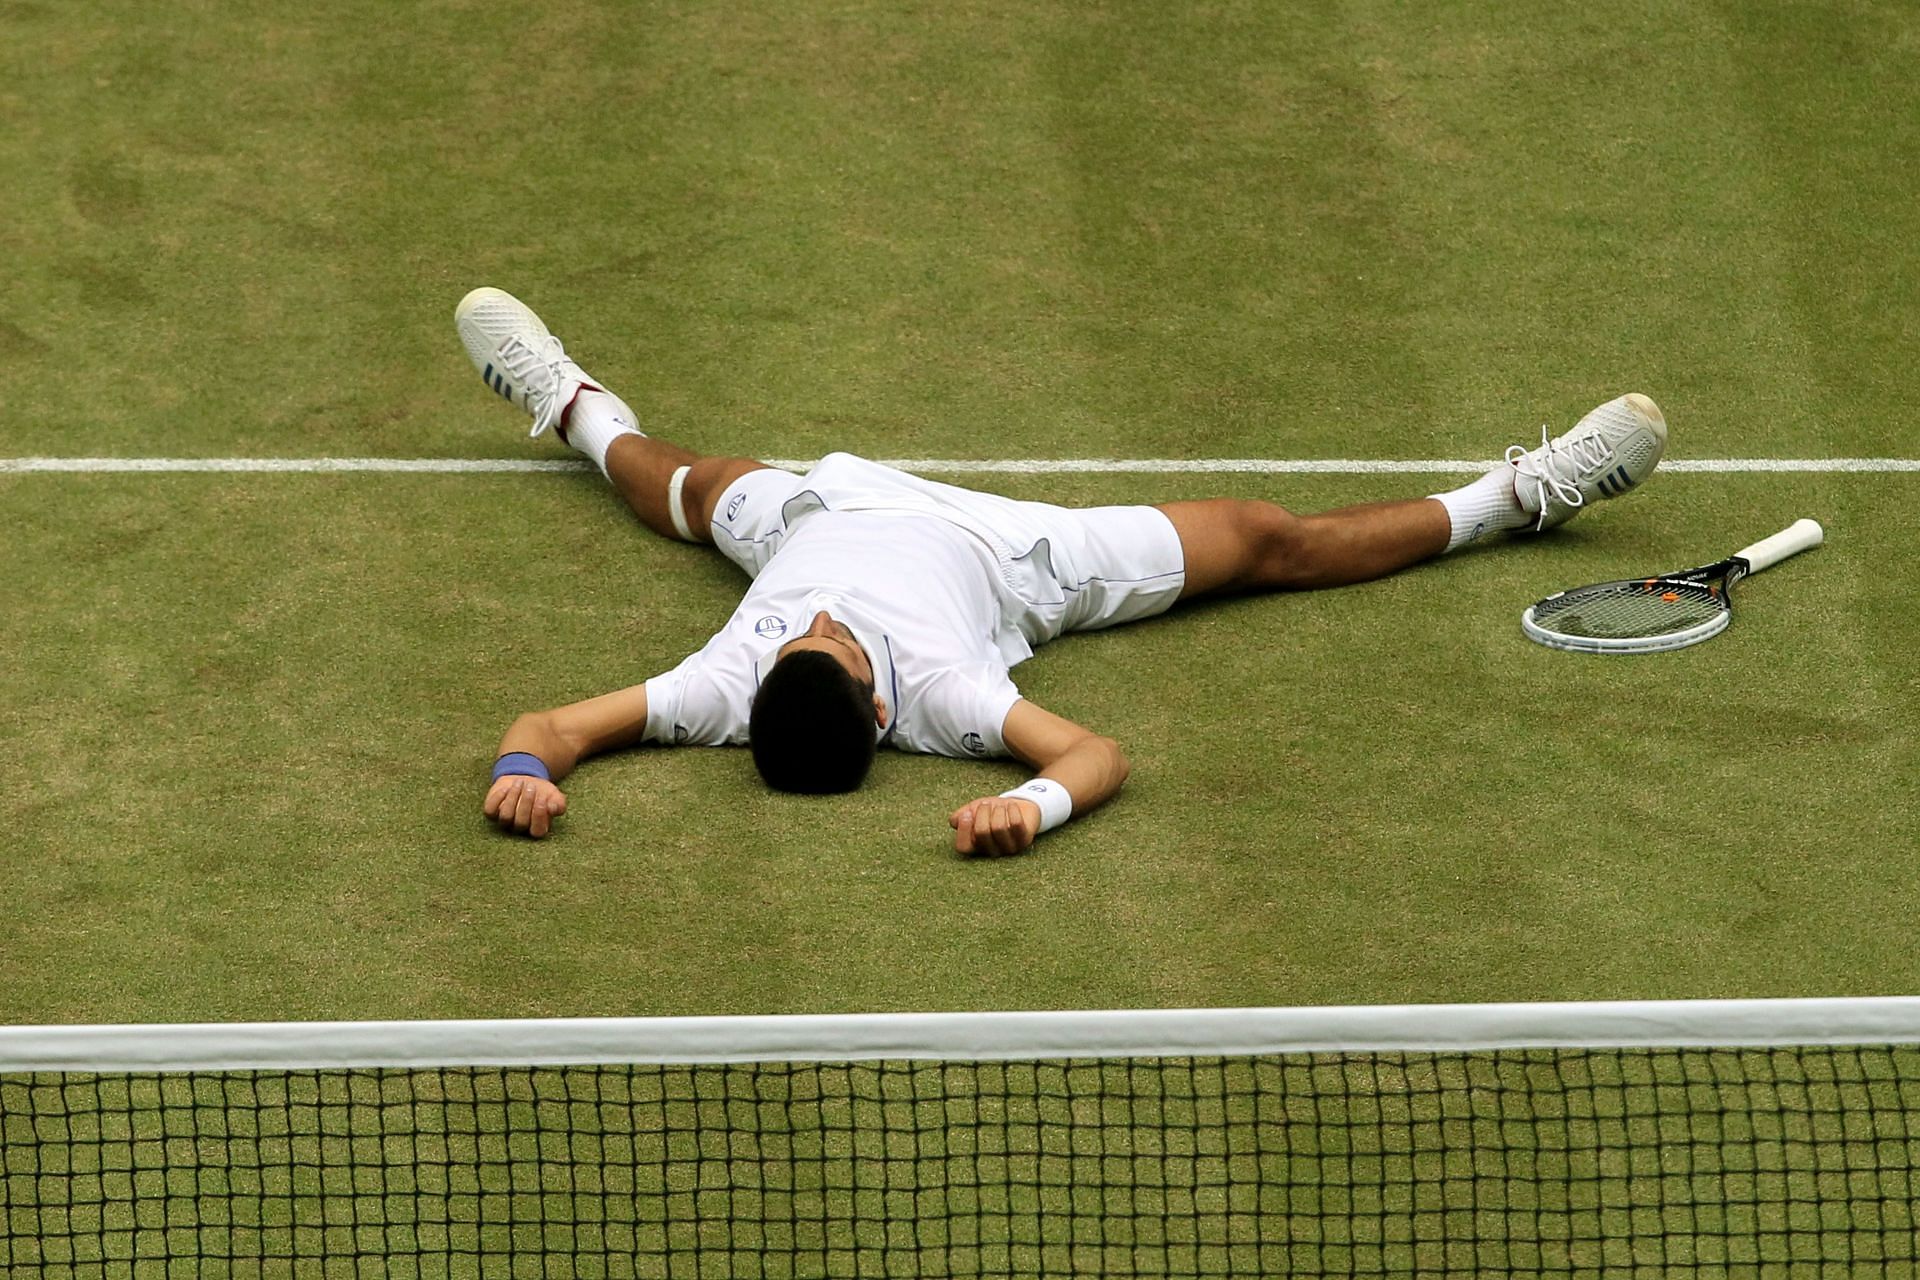 The Championships - Wimbledon 2011: Djokovic triumphs on grass